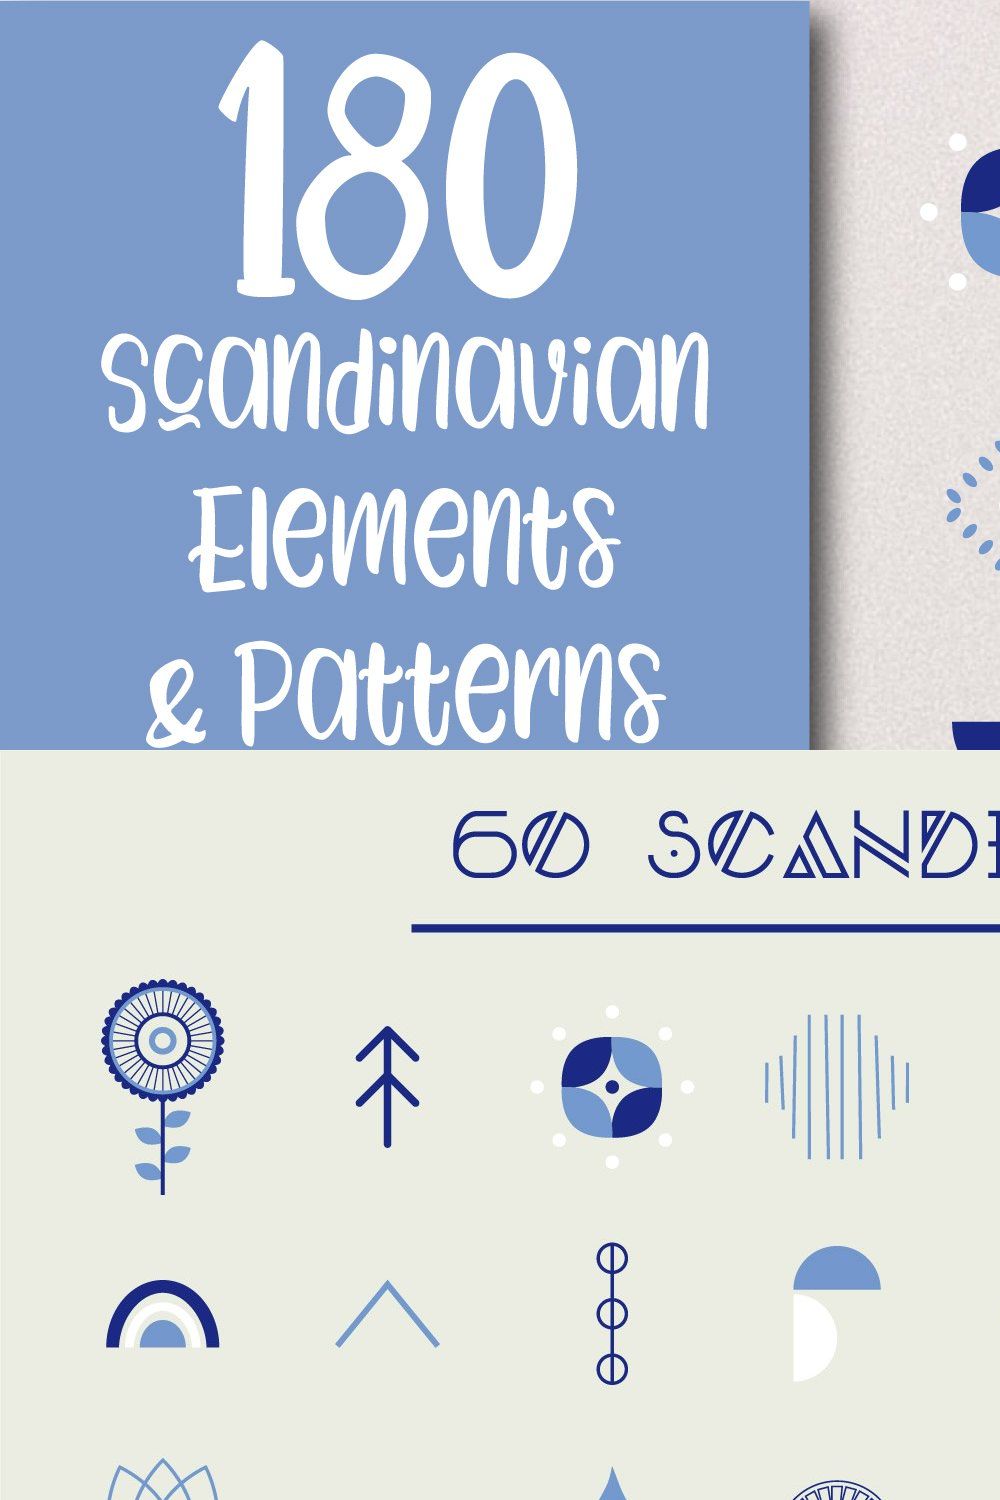 180 Scandinavian Patterns Bundle pinterest preview image.